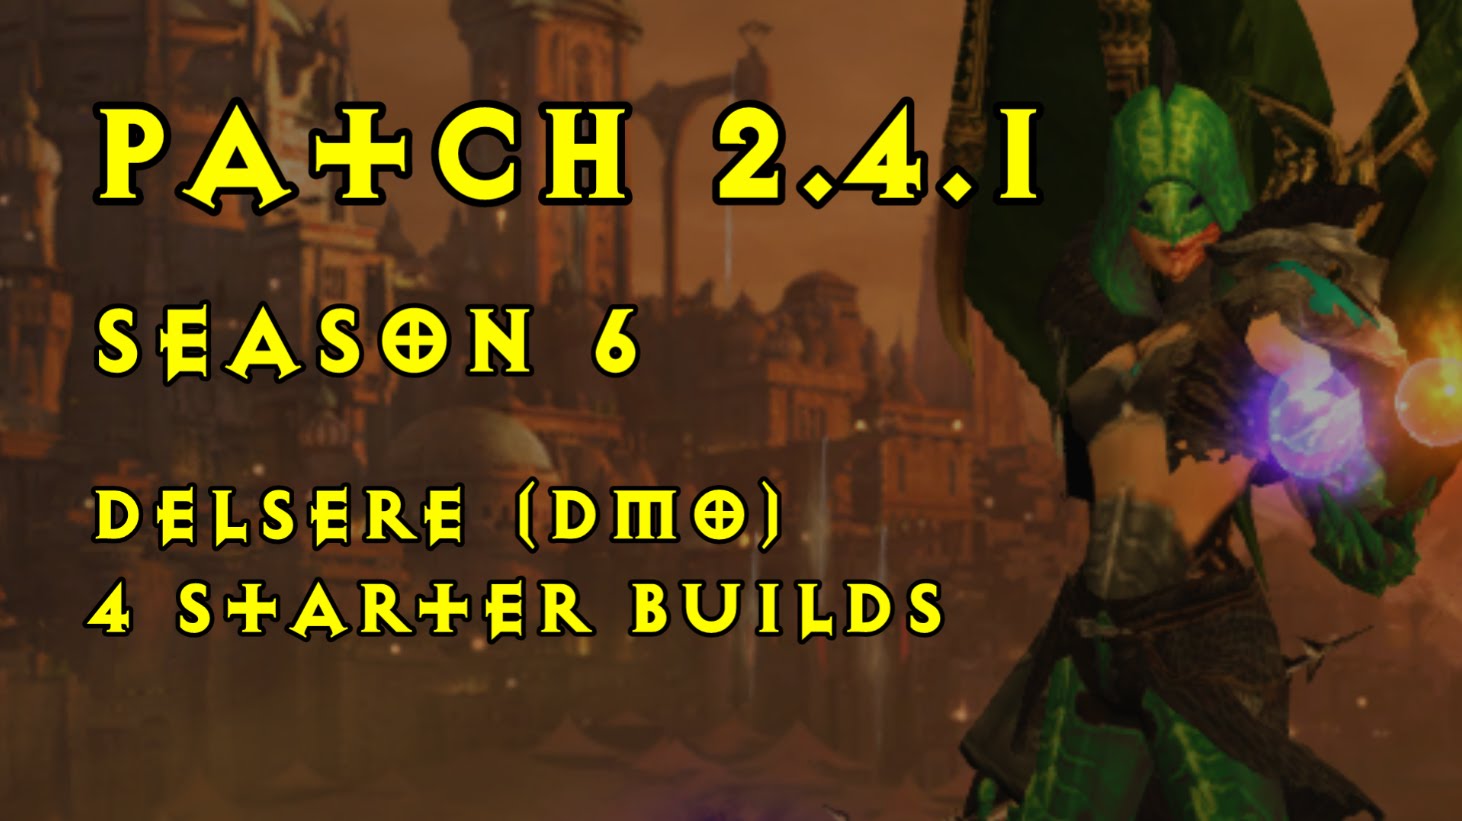 [Diablo 3] 2.4.1 - Wizard - 4 DMO starter builds after Haedrig's Gift in Season 6 Video   